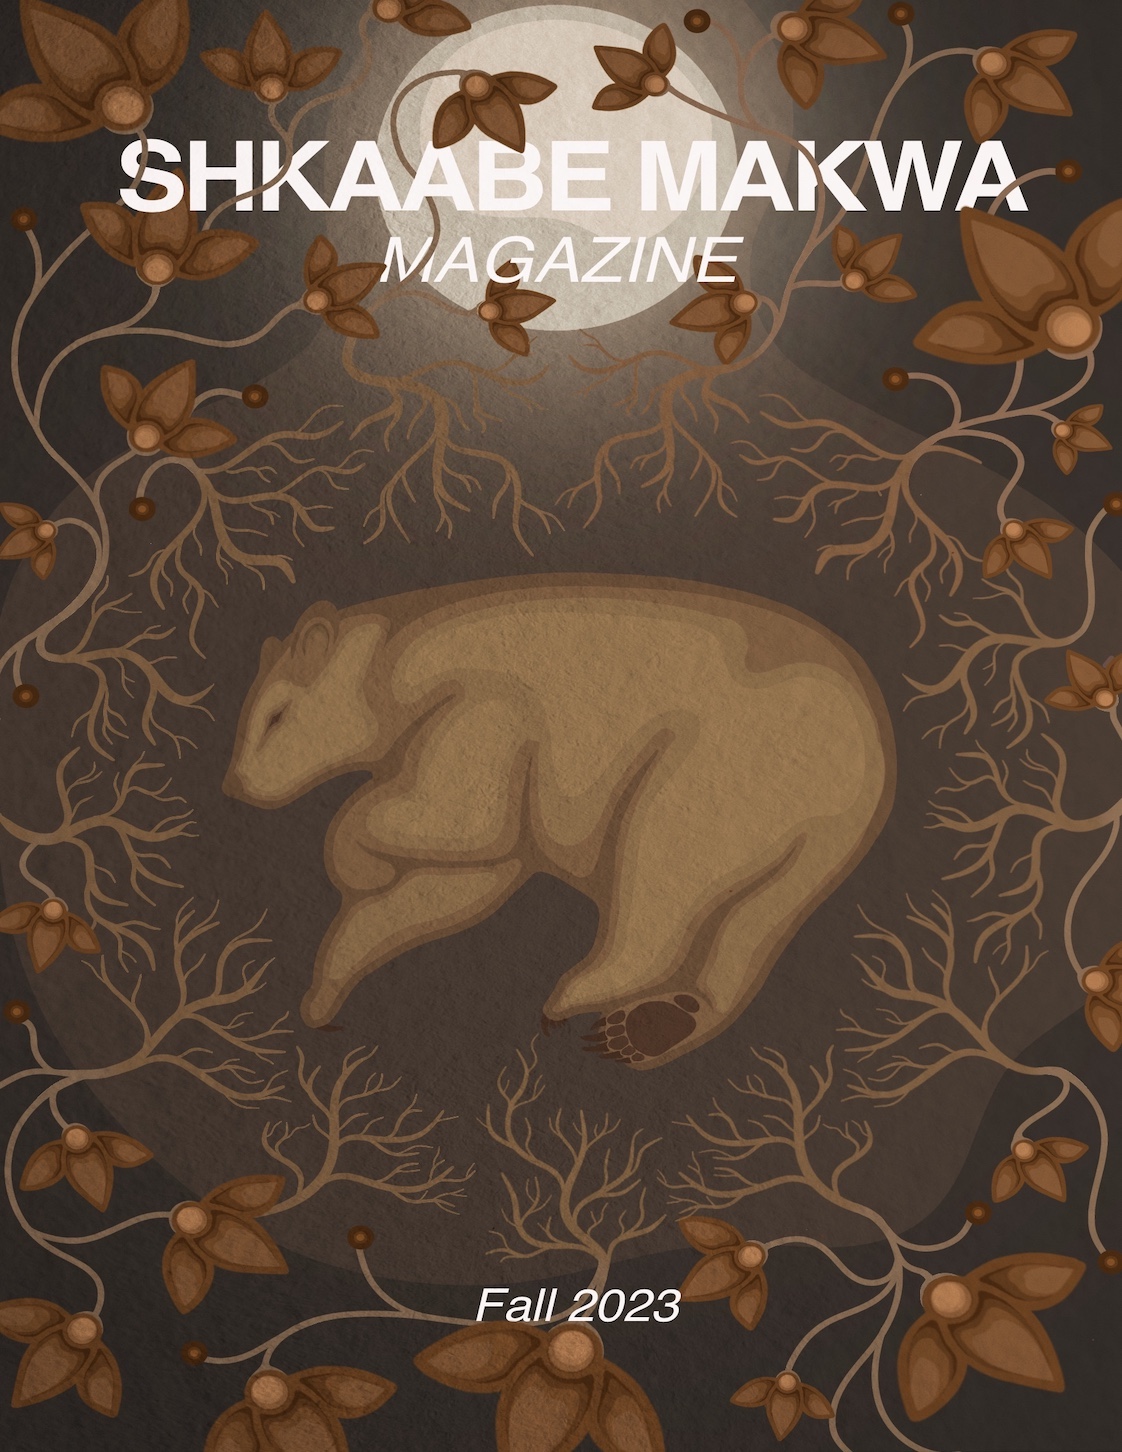 The cover of Shkaabe Makwa Magazine fall 2023. An illustration of a brown bear sleeps among fall leaves.